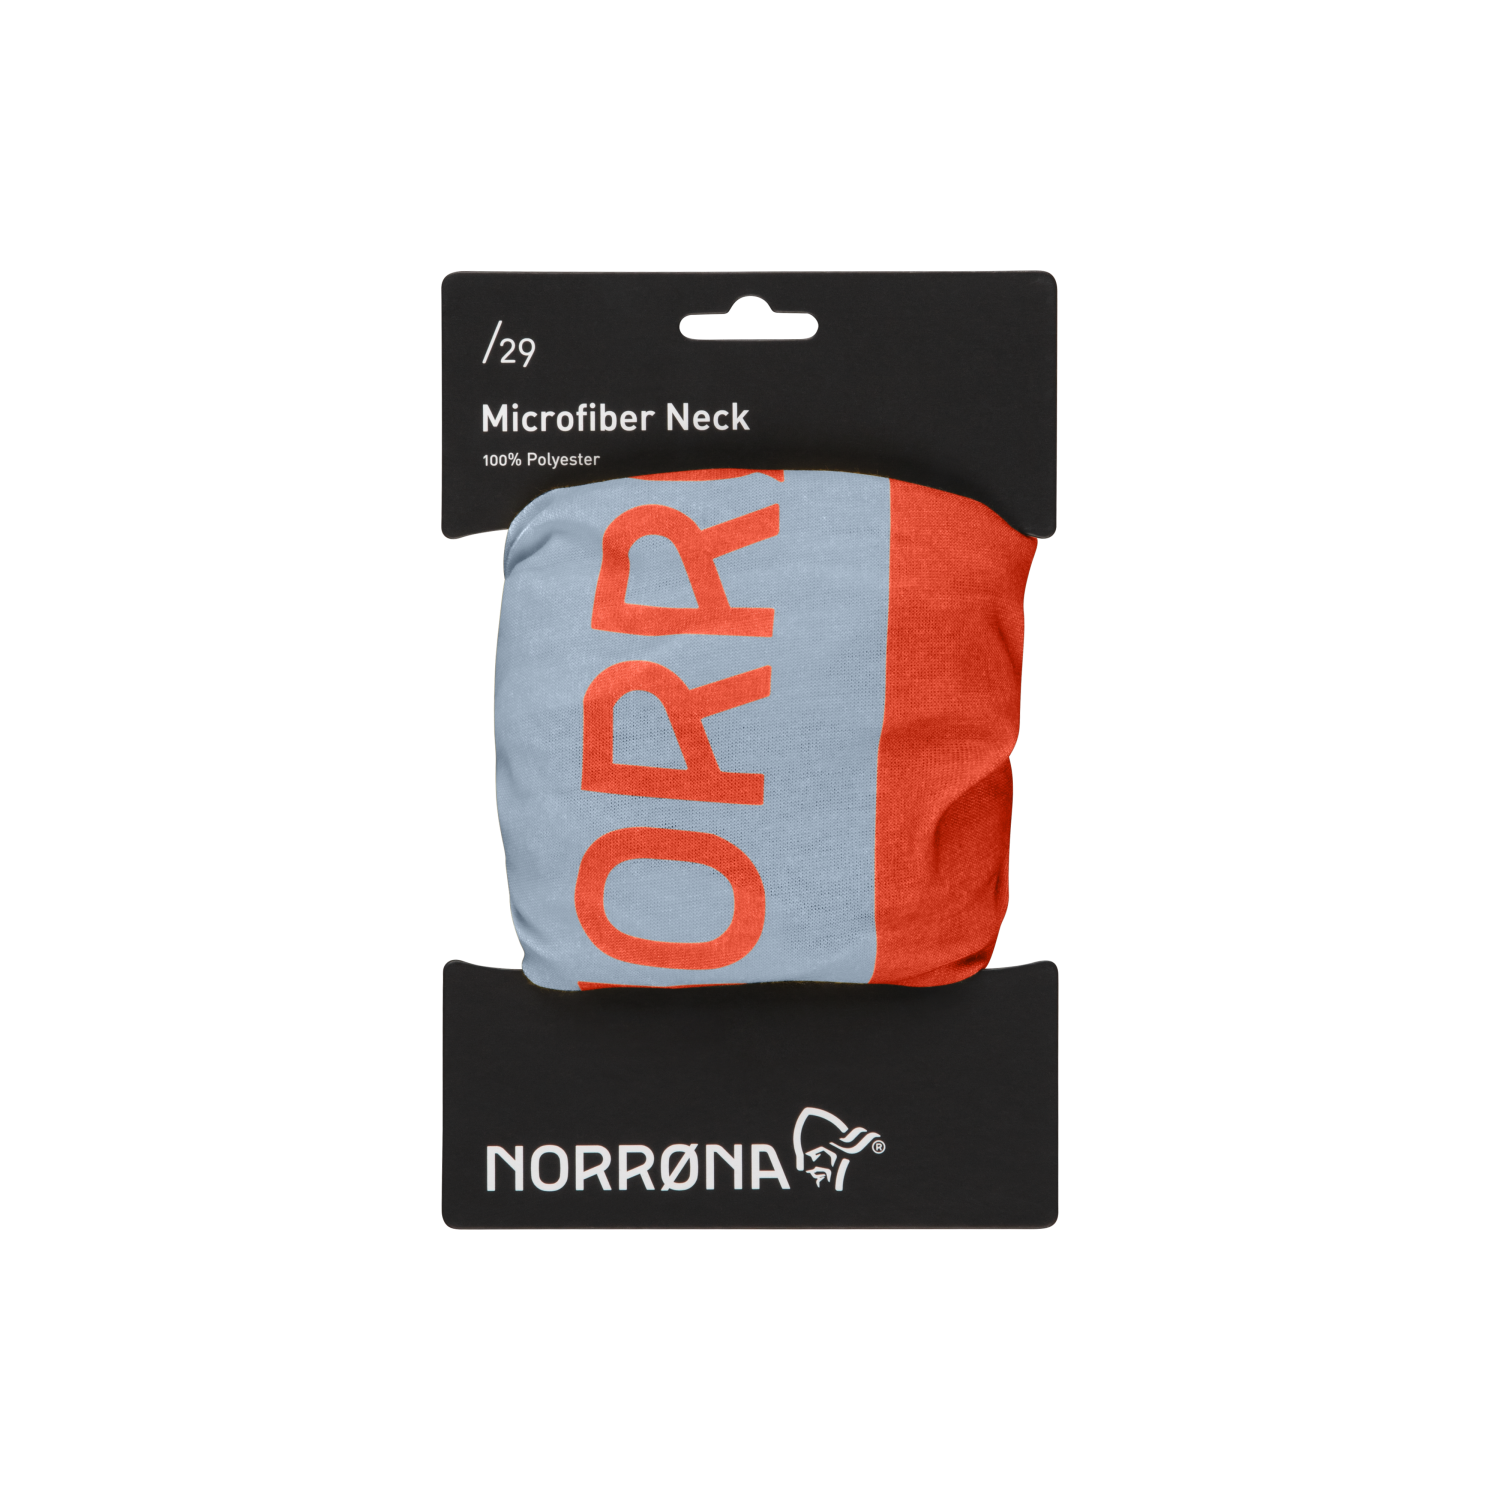 Norrøna /29  microfiber neck unisex